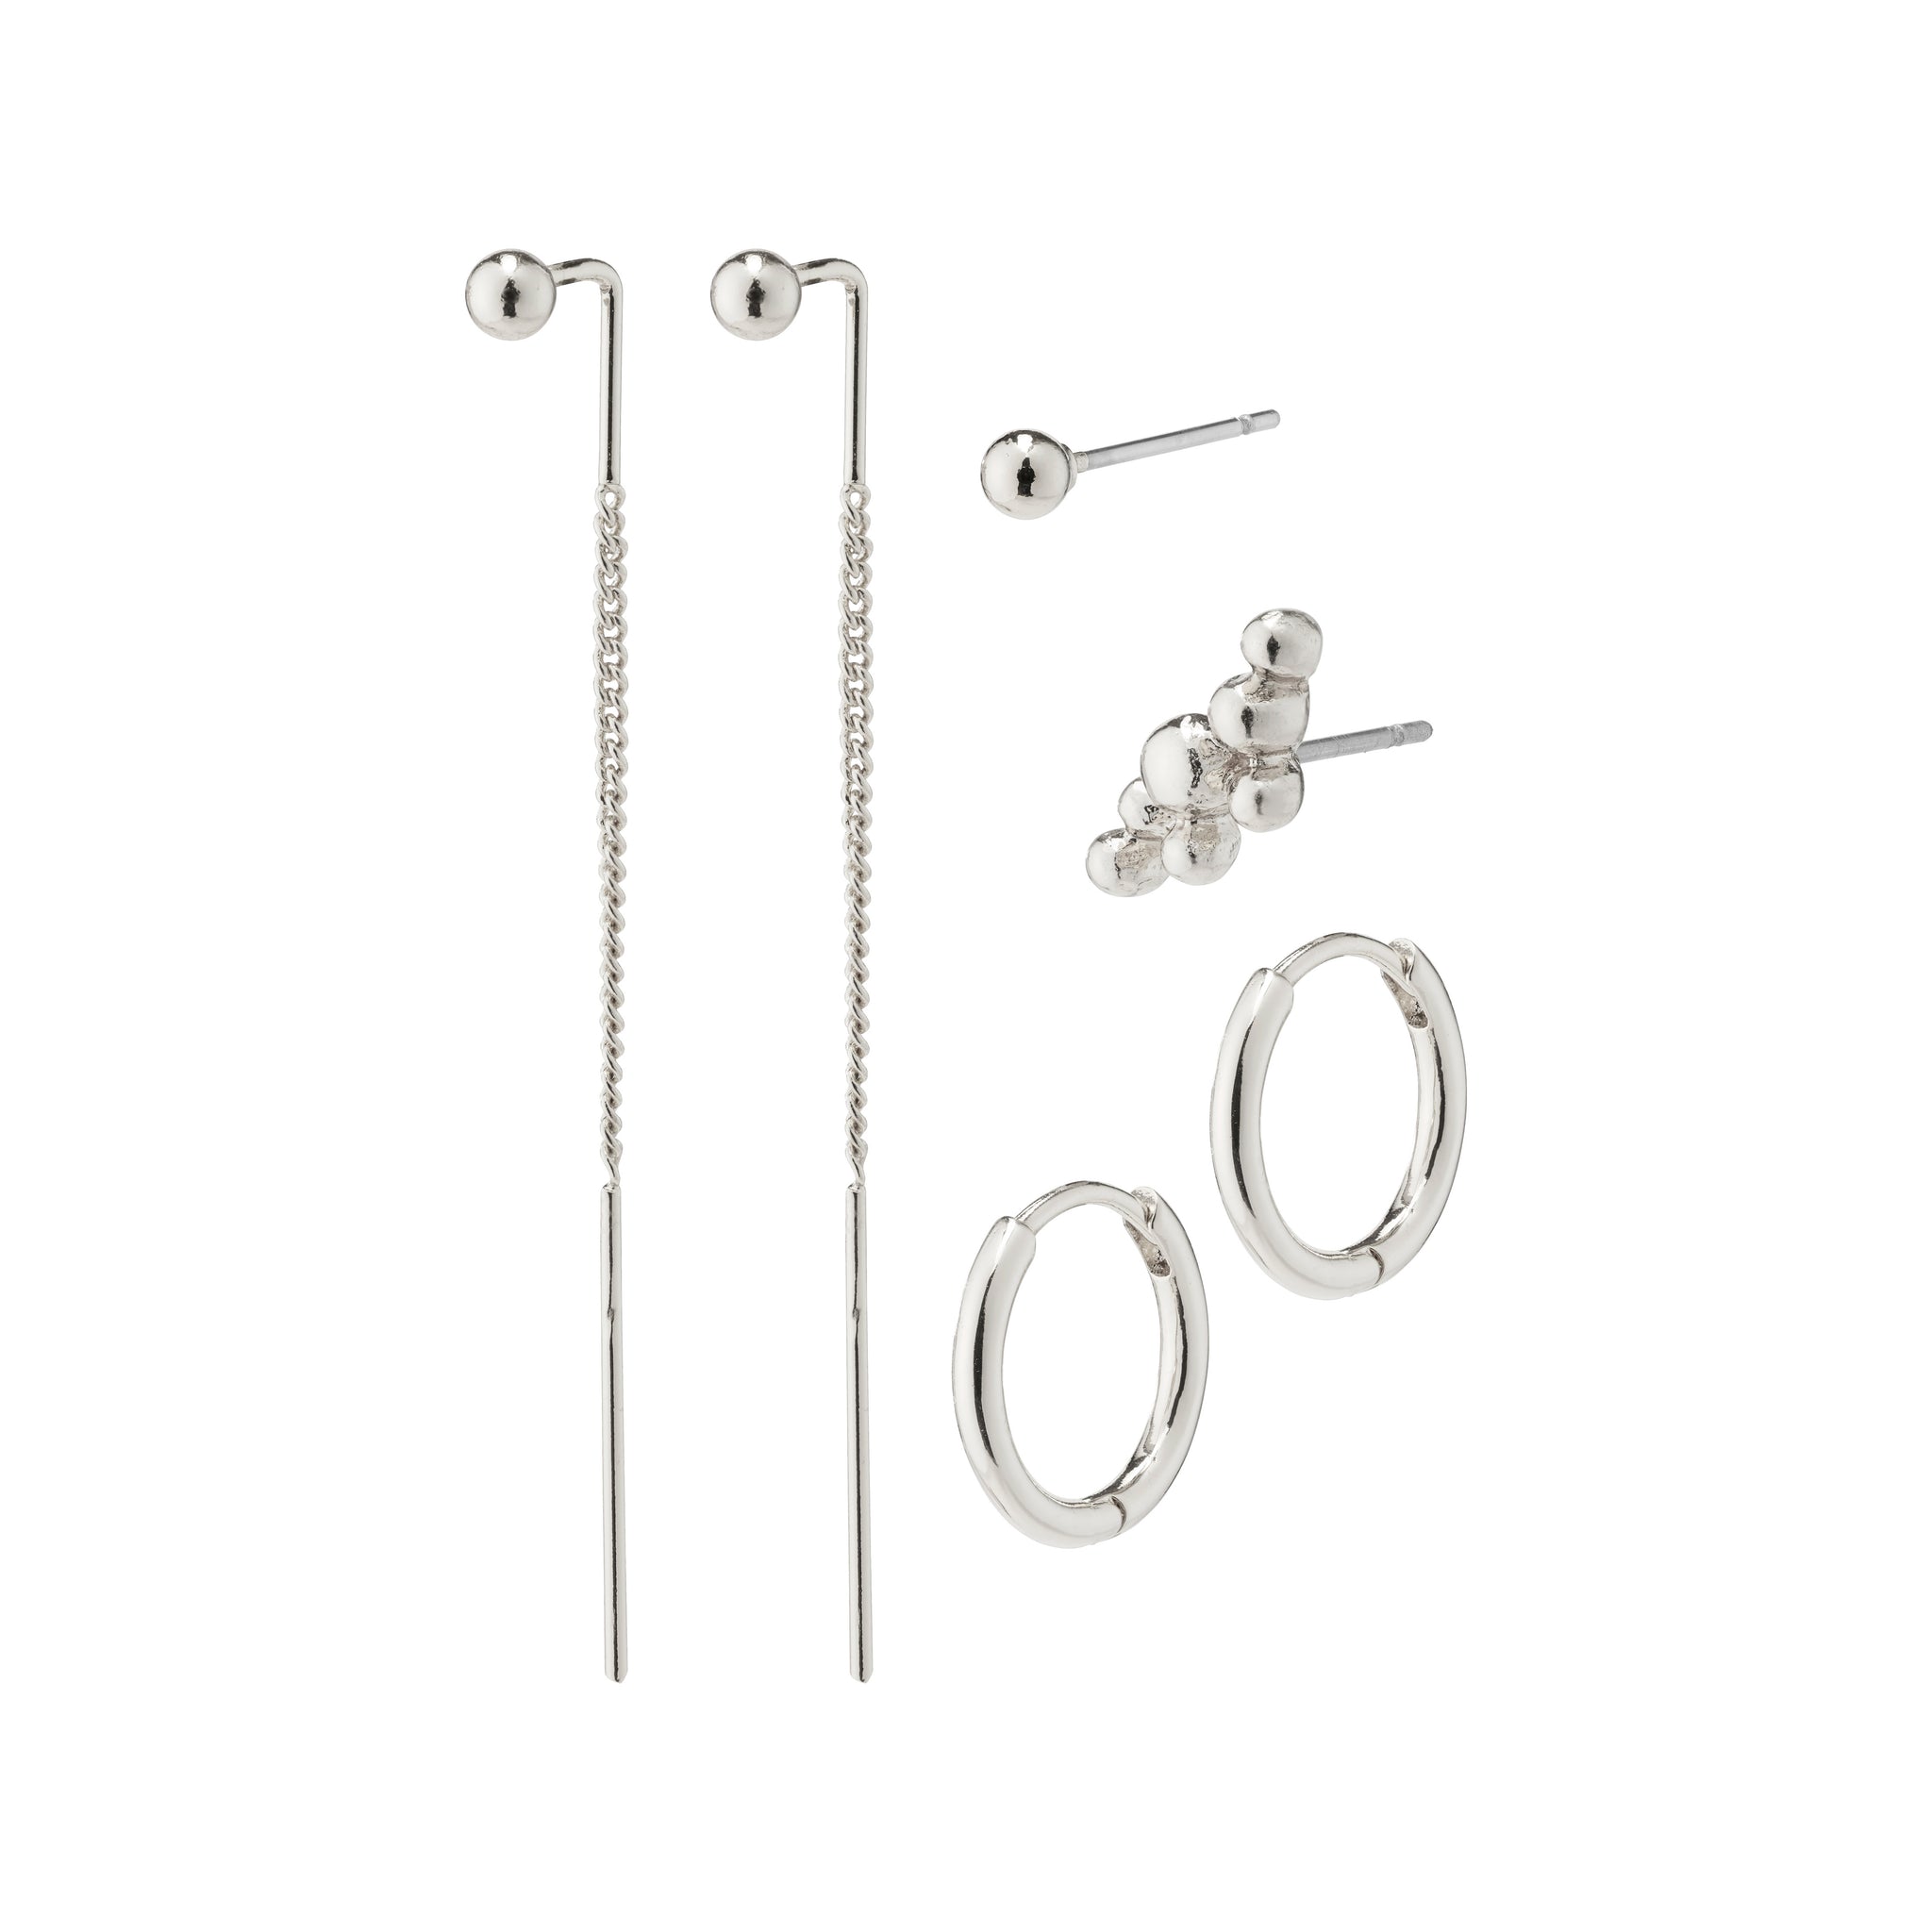 Siv Earrings 4-in-1 - Silver Plated